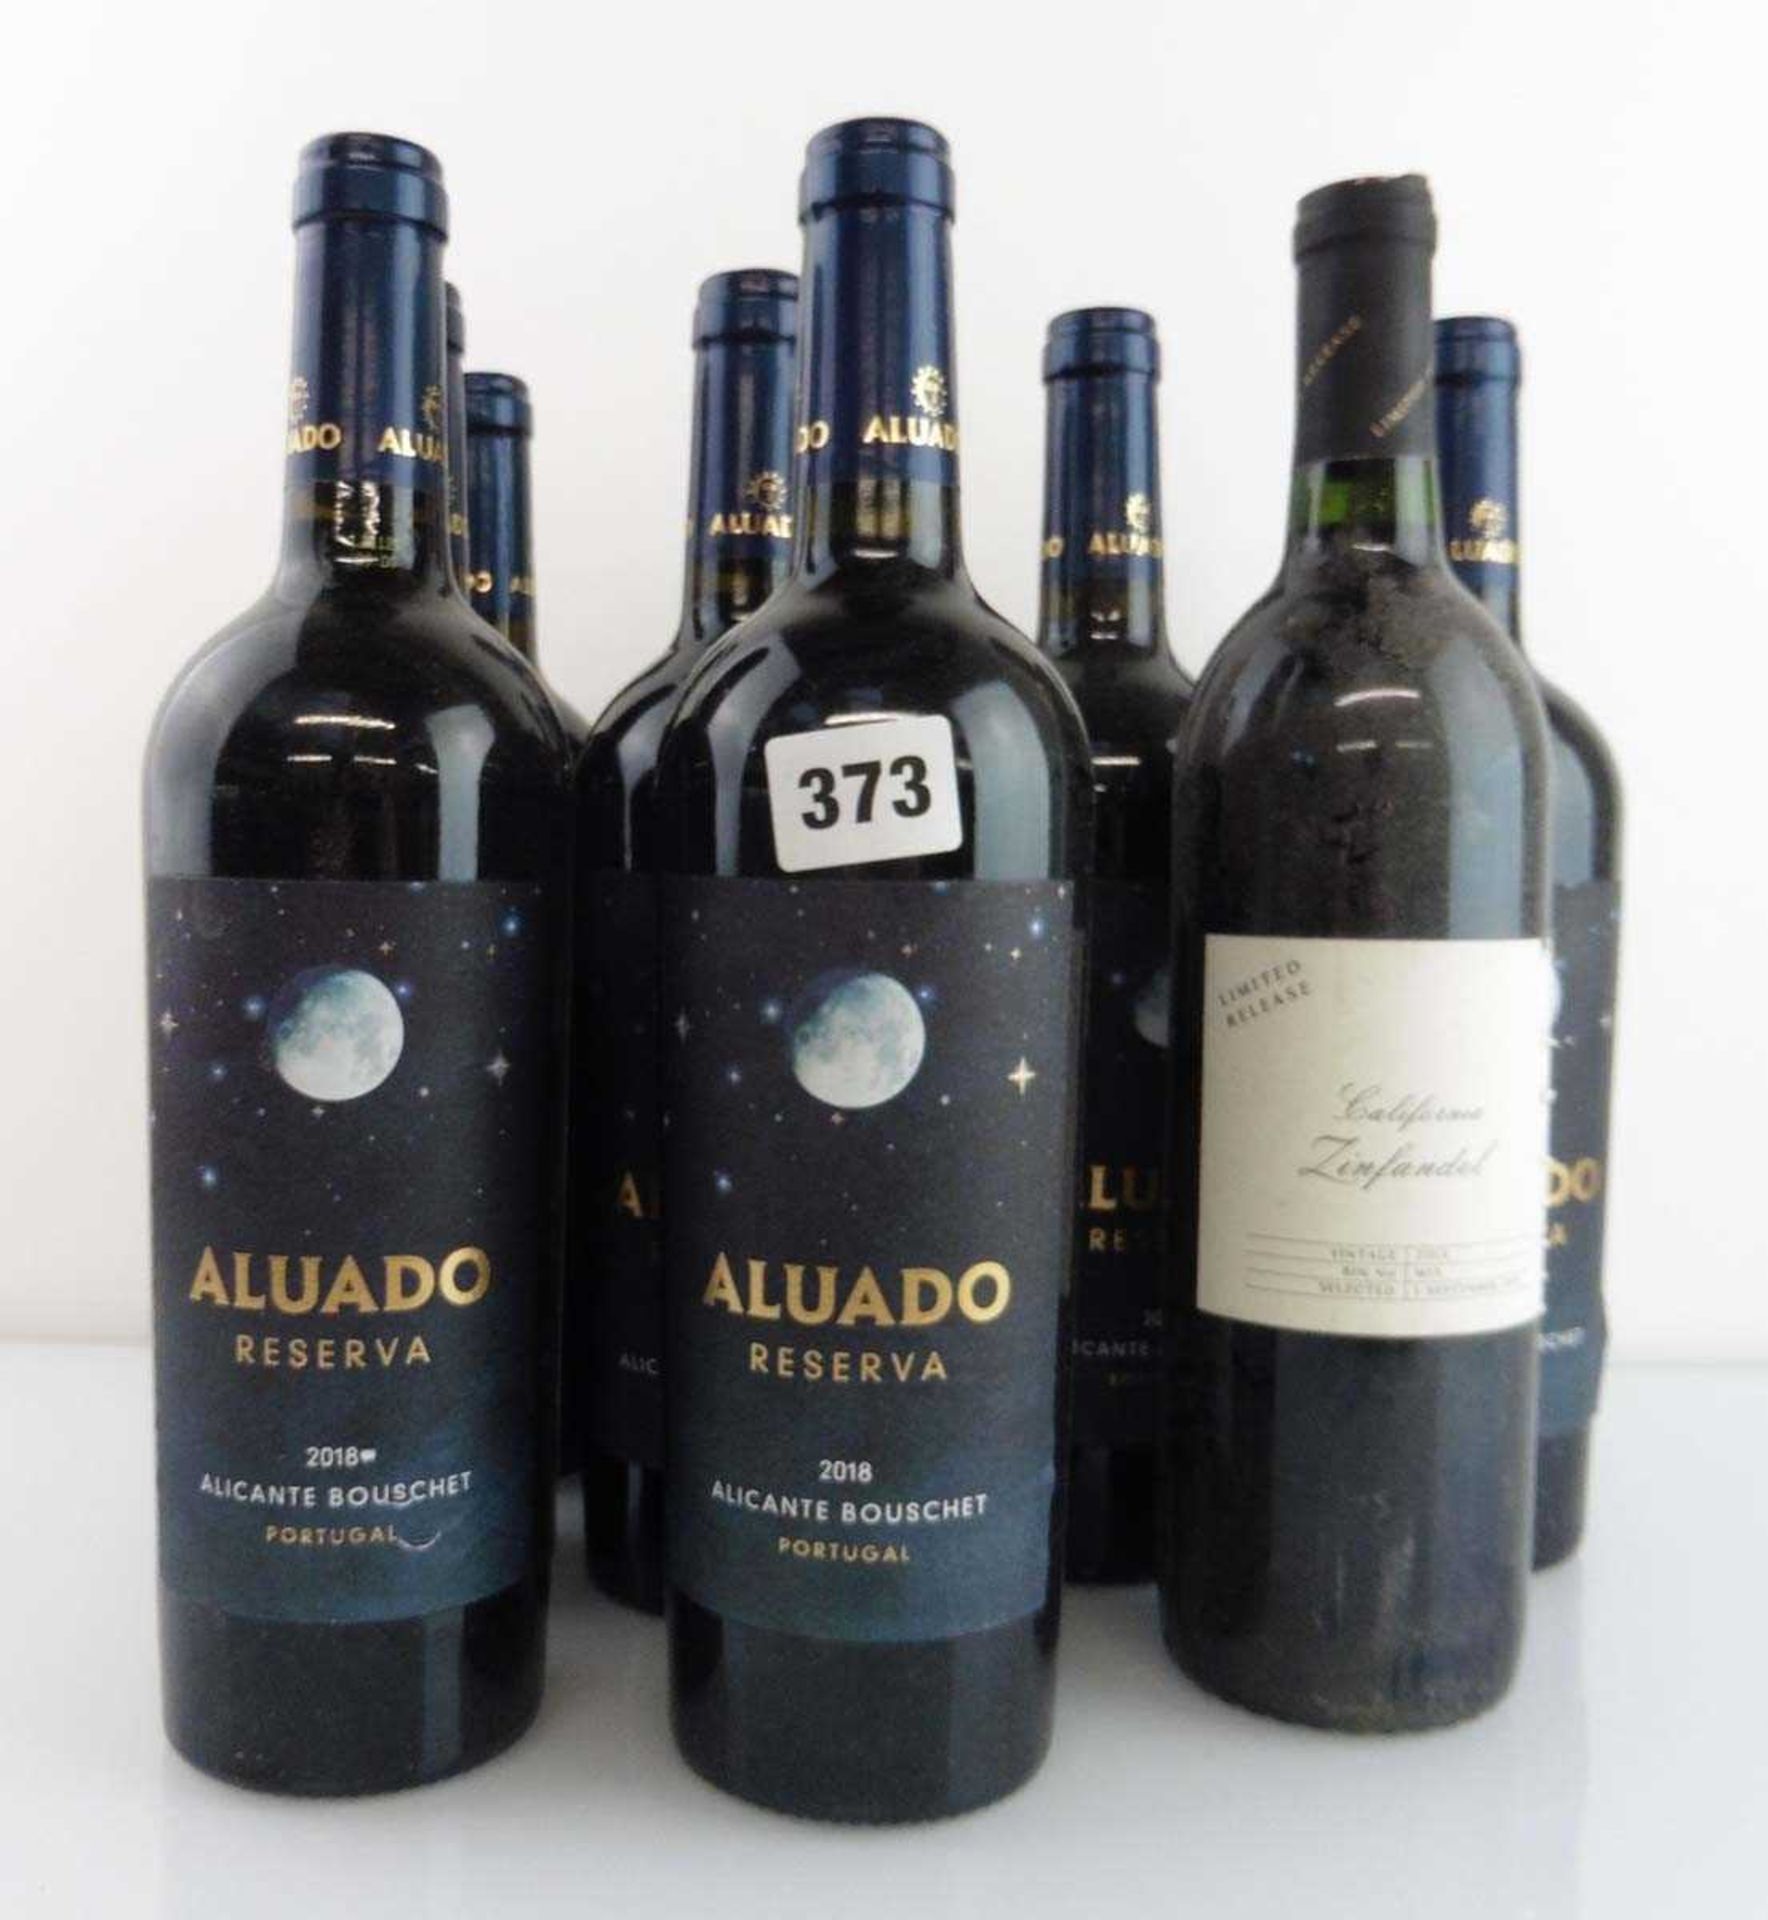 11 bottles, 10x Alicante Bouschet 2018 Aluado Reserva Portugal & 1x California Zinfandel 2013